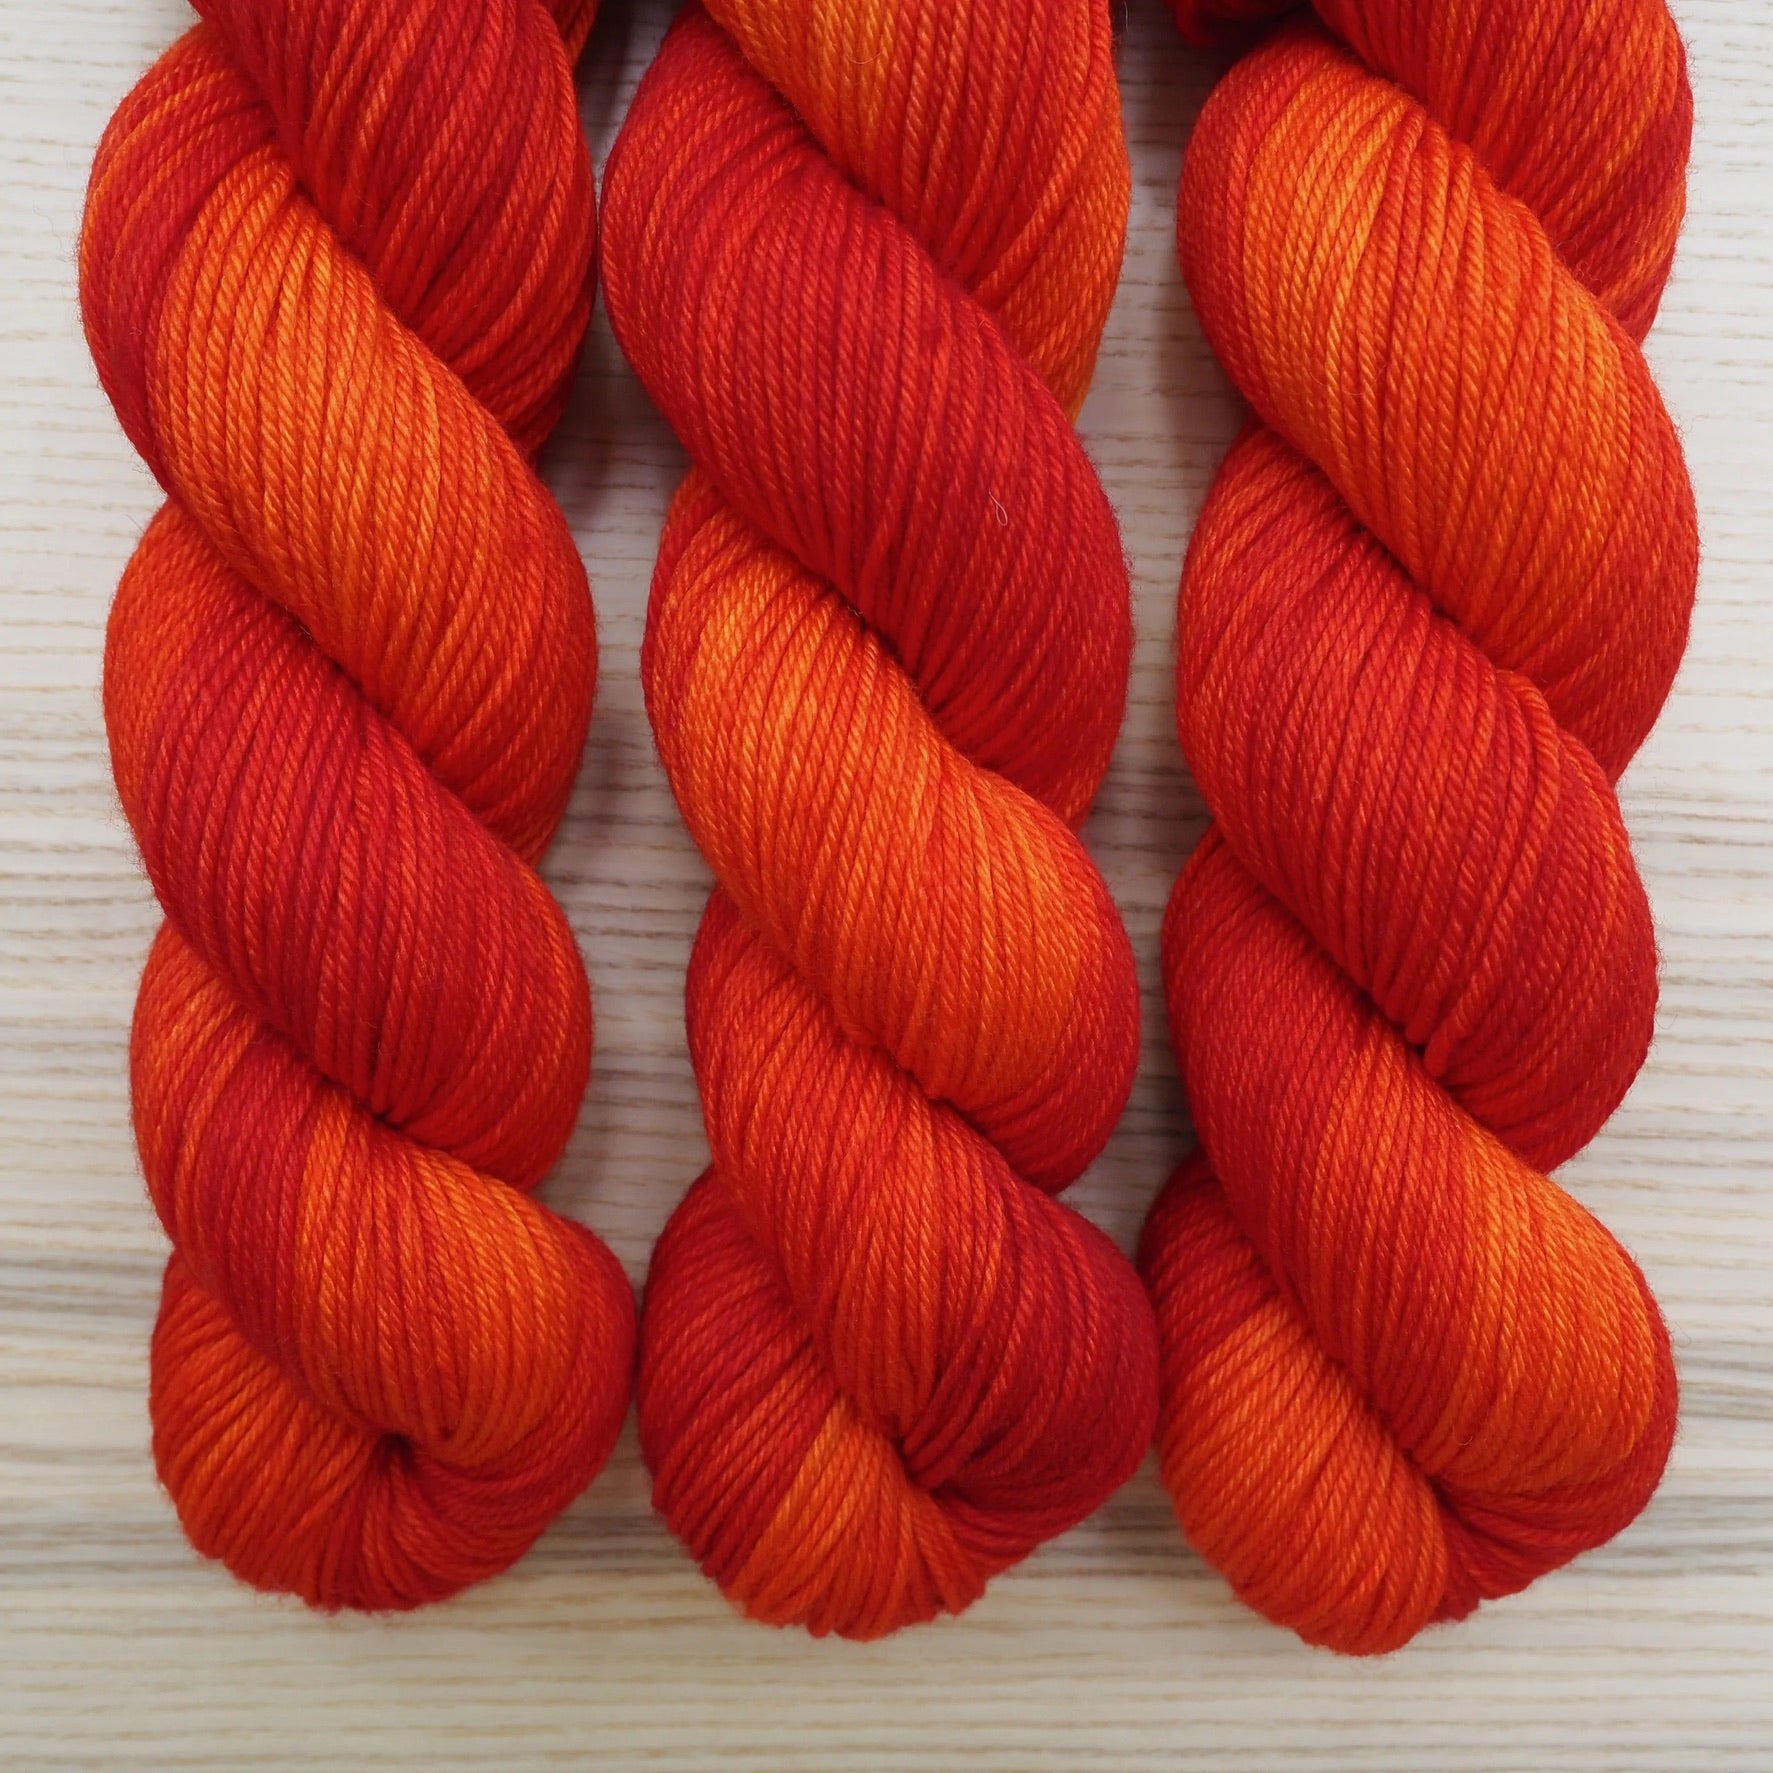 Red Orange Yarn 